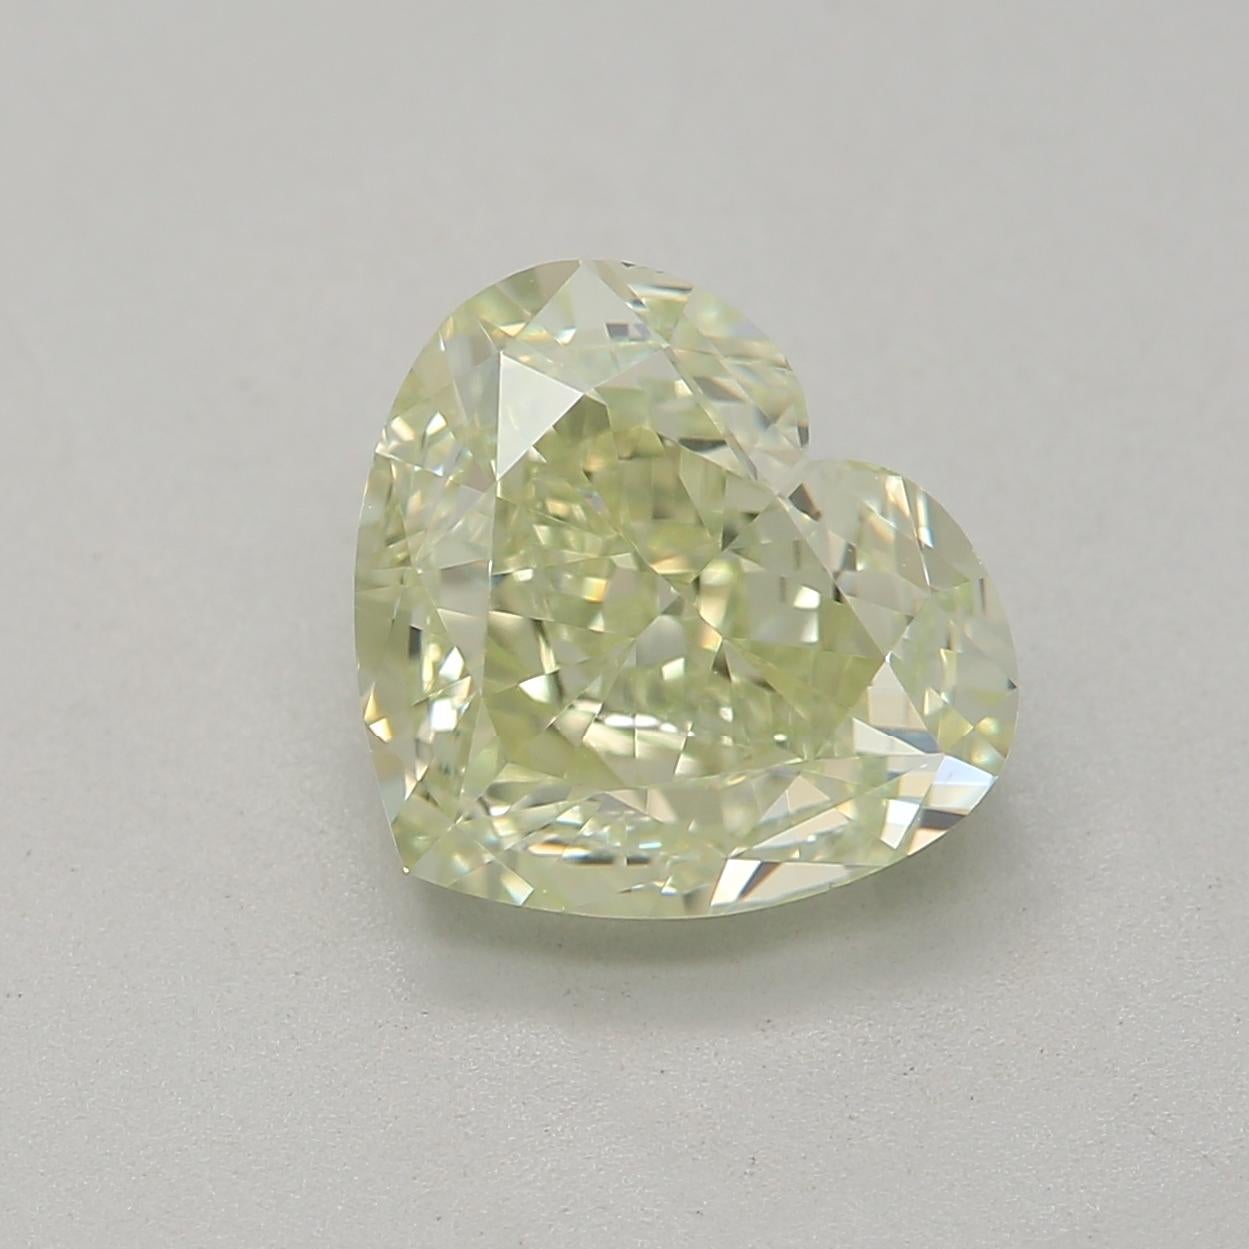 1.51 Carat Fancy Light Green Yellow Heart Cut Diamond VS1 Clarity GIA Certified For Sale 2